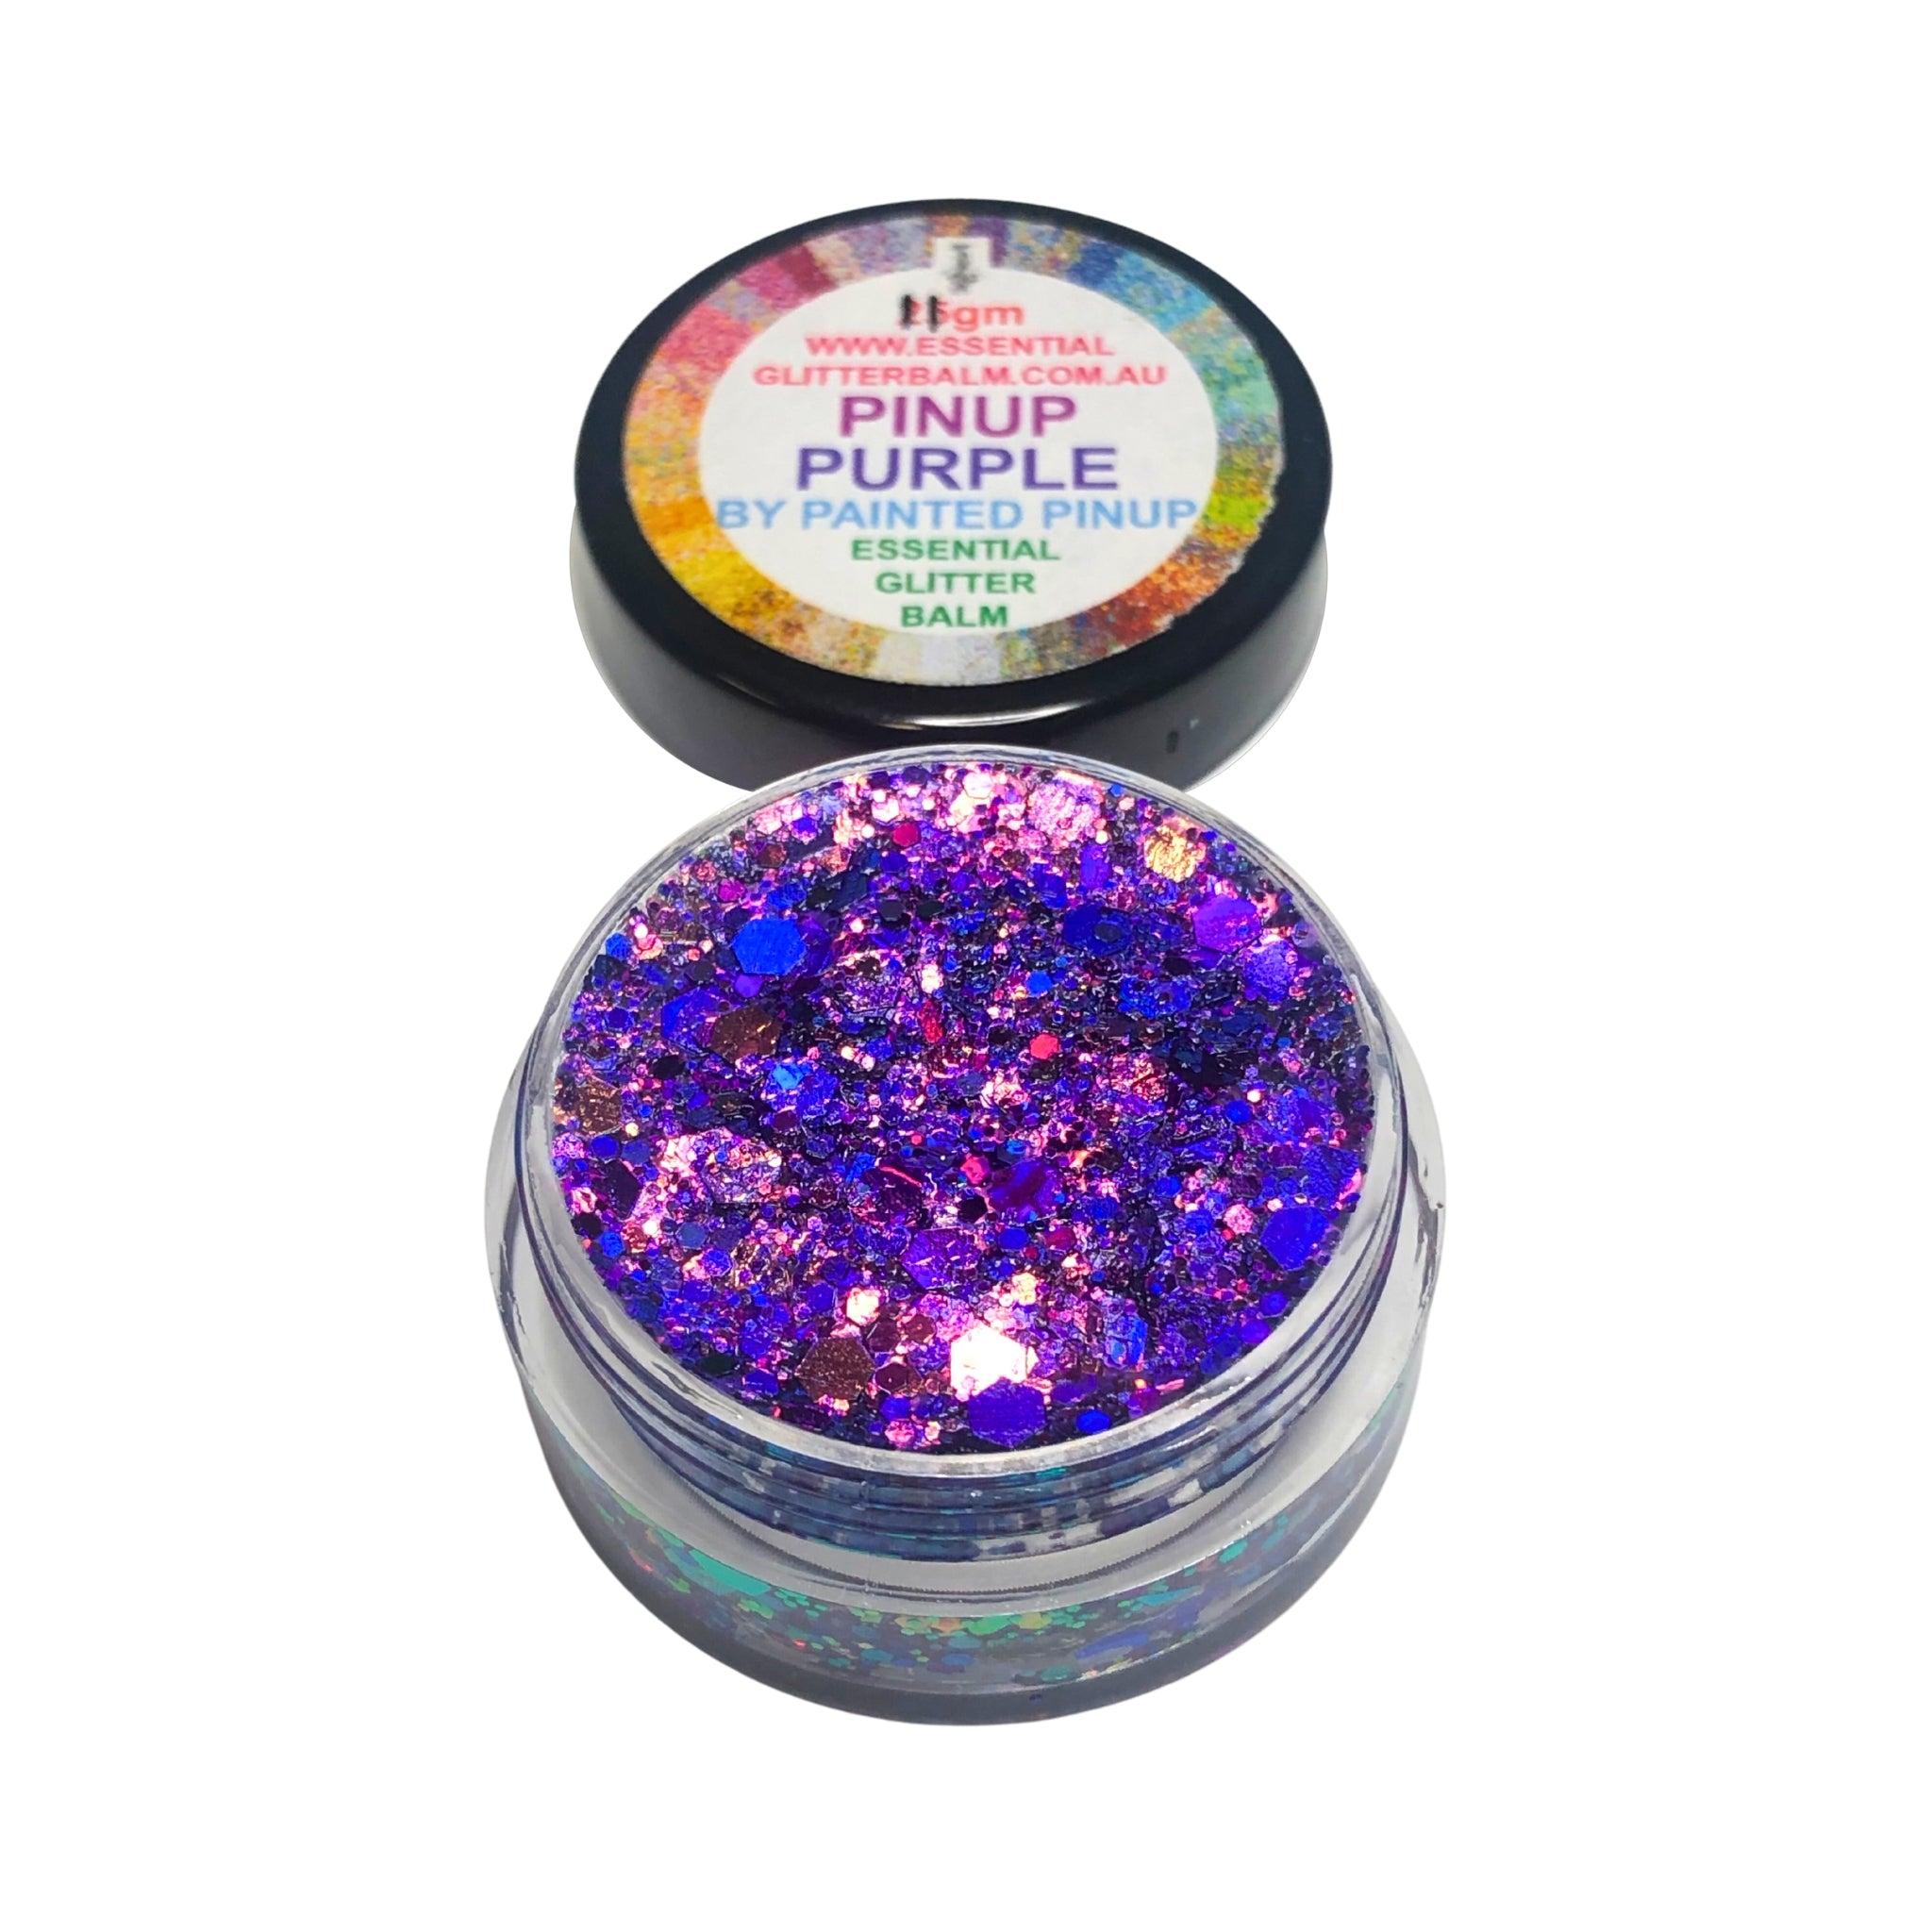 Essential Glitter Balm - PINUP PURPLE